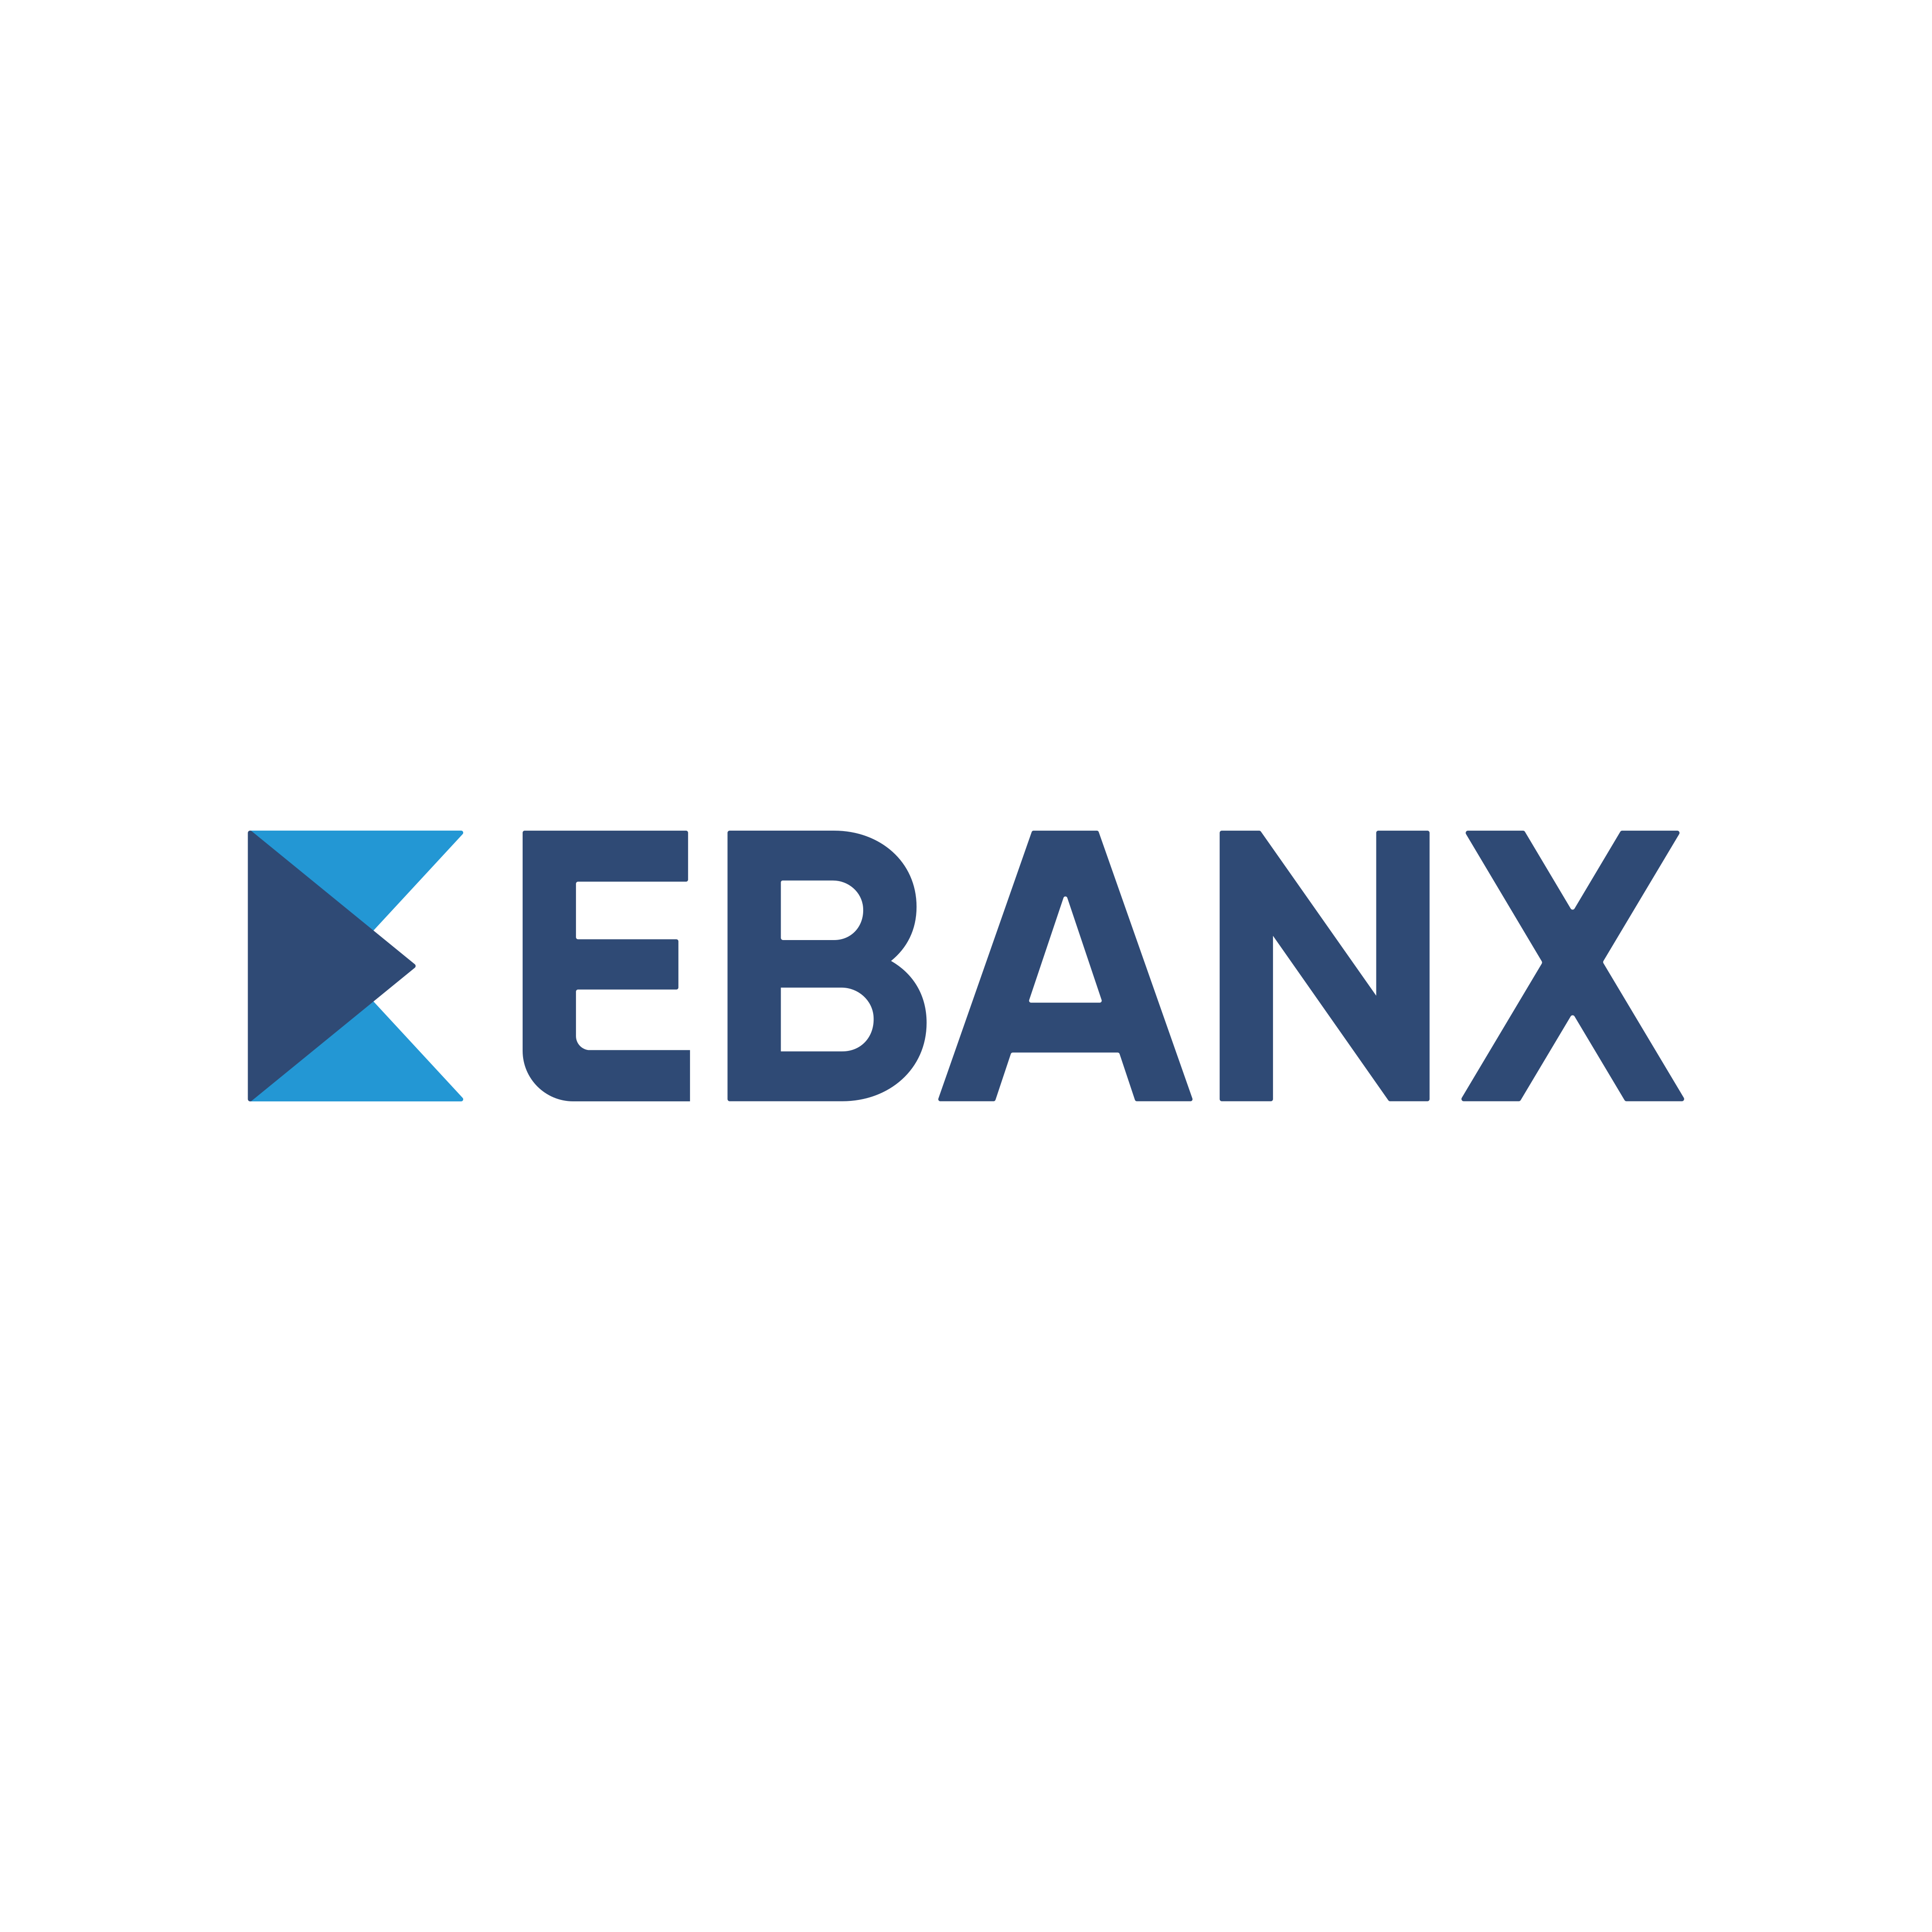 ebanx logo 0 - EBANX Logo